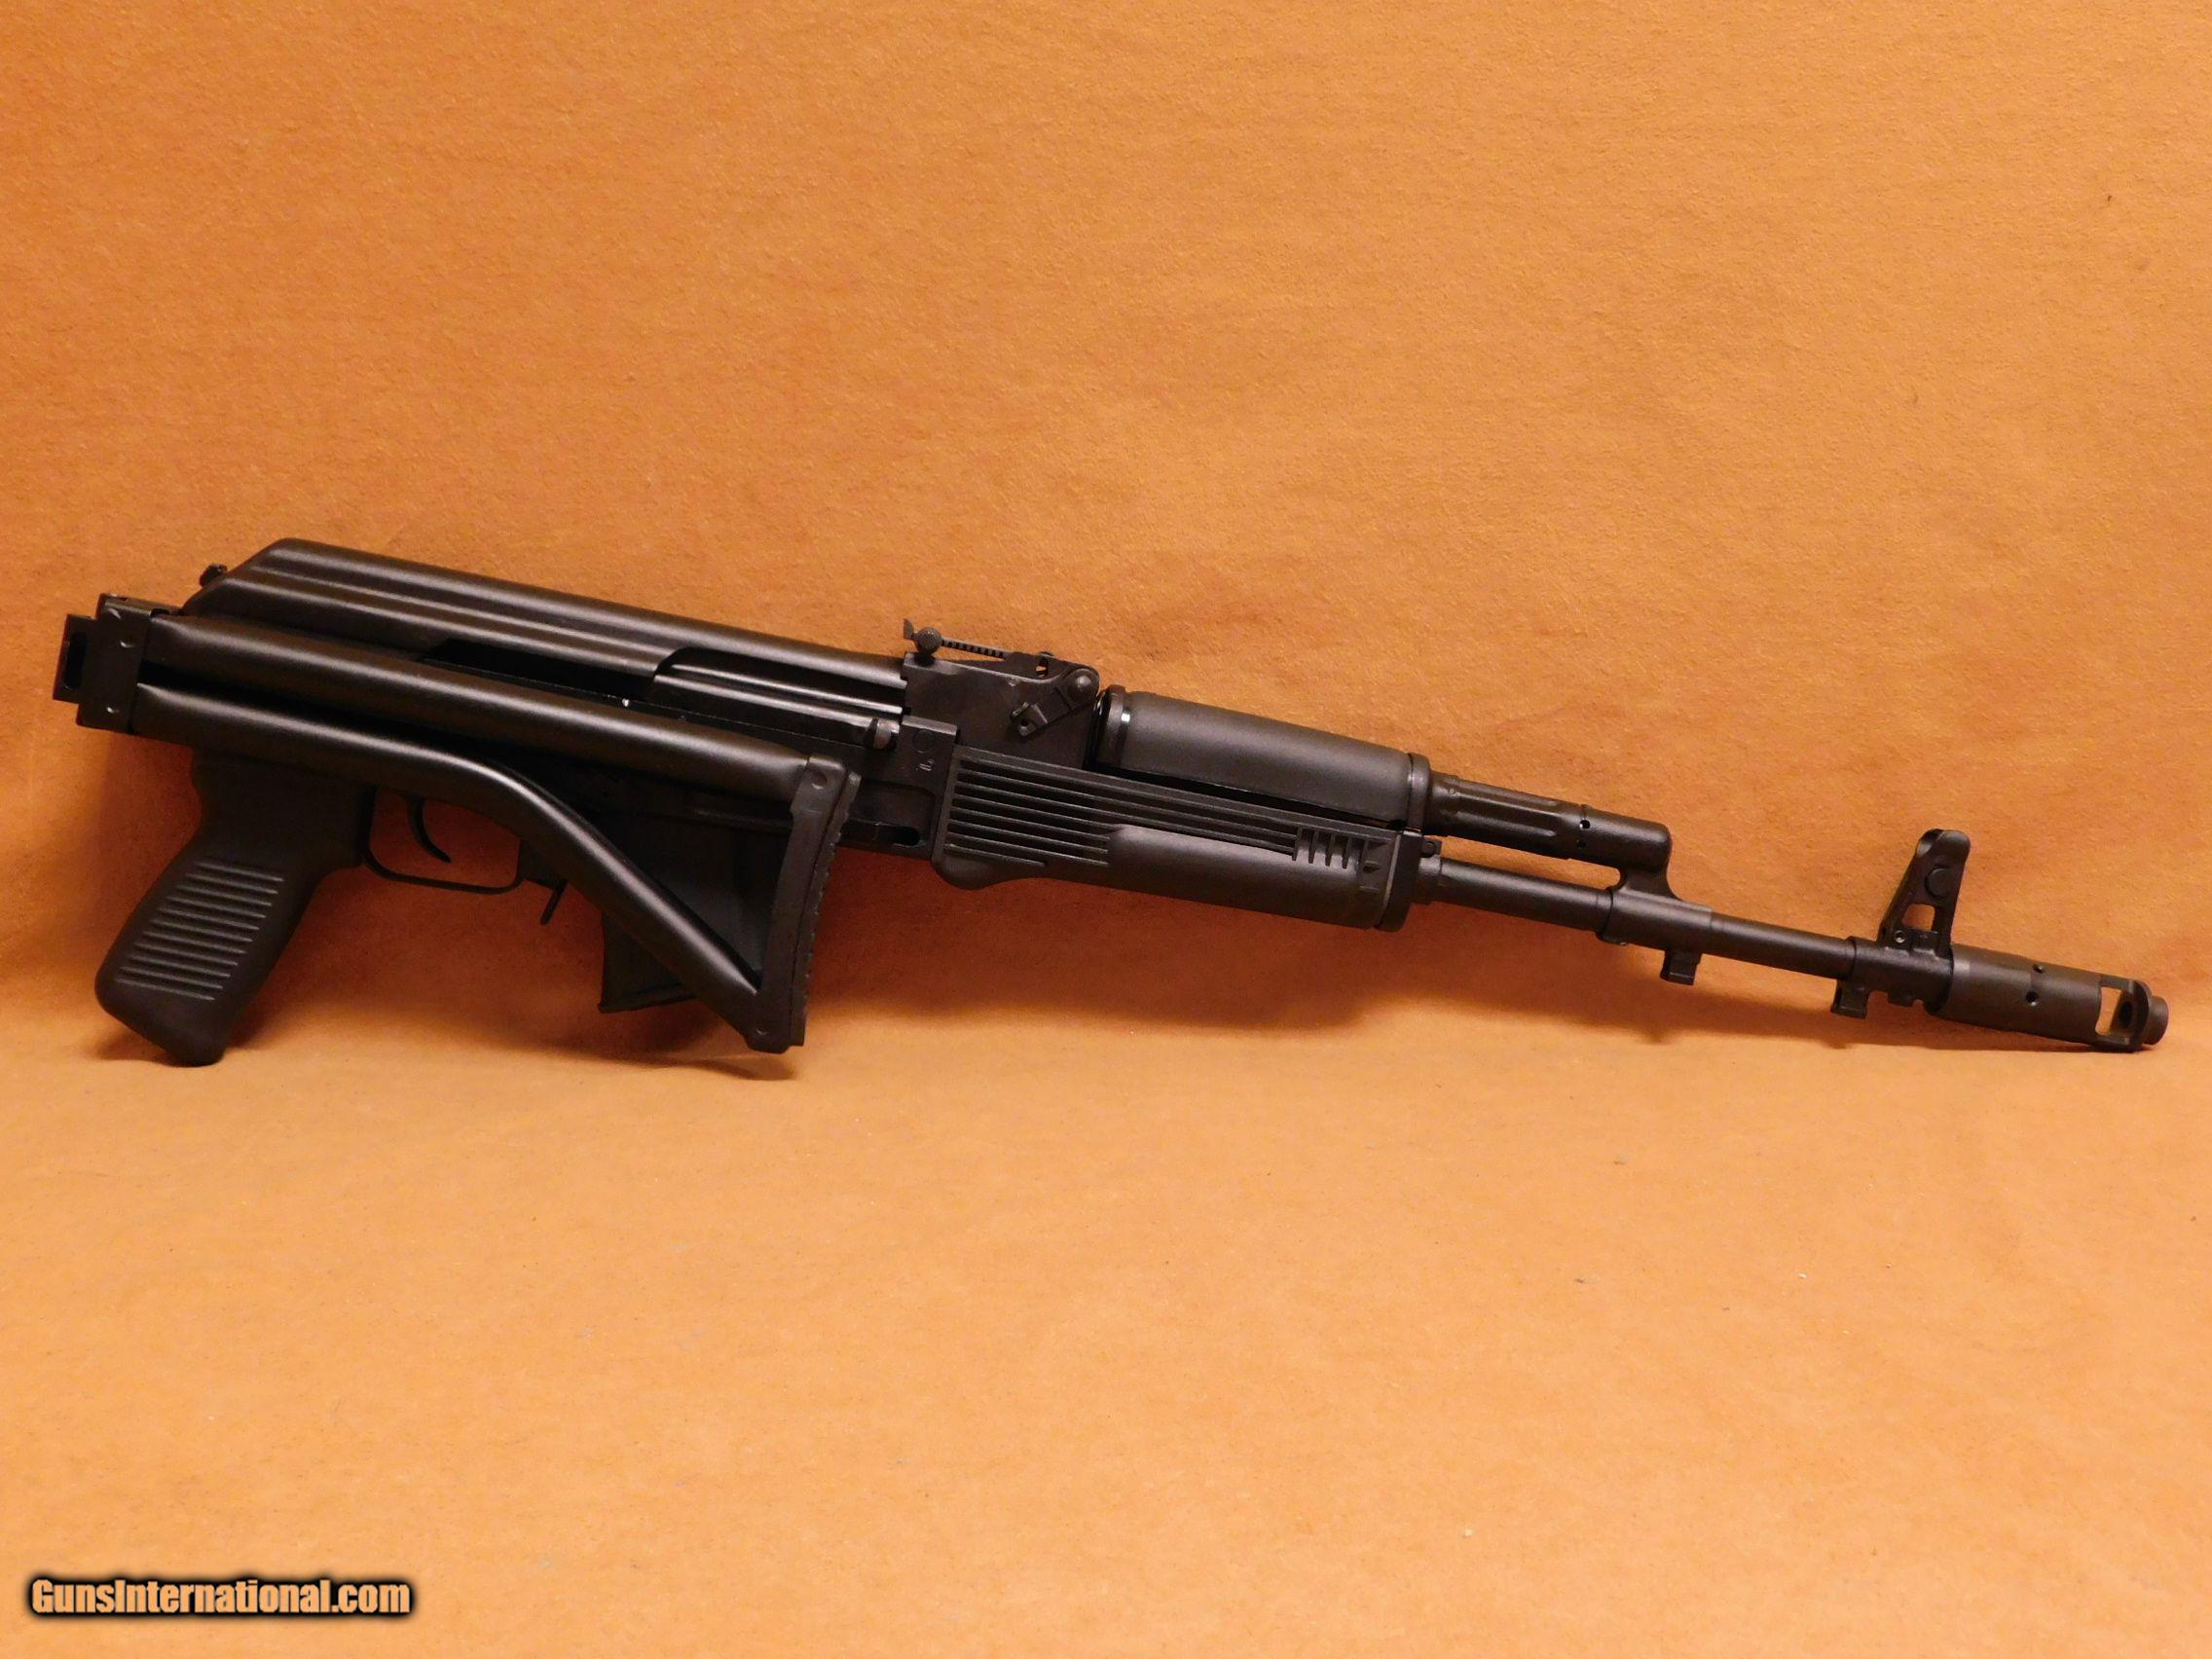 Arsenal, Inc. > SAM7 SERIES > SAM7SF SERIES, 7.62, milled receiver rifle